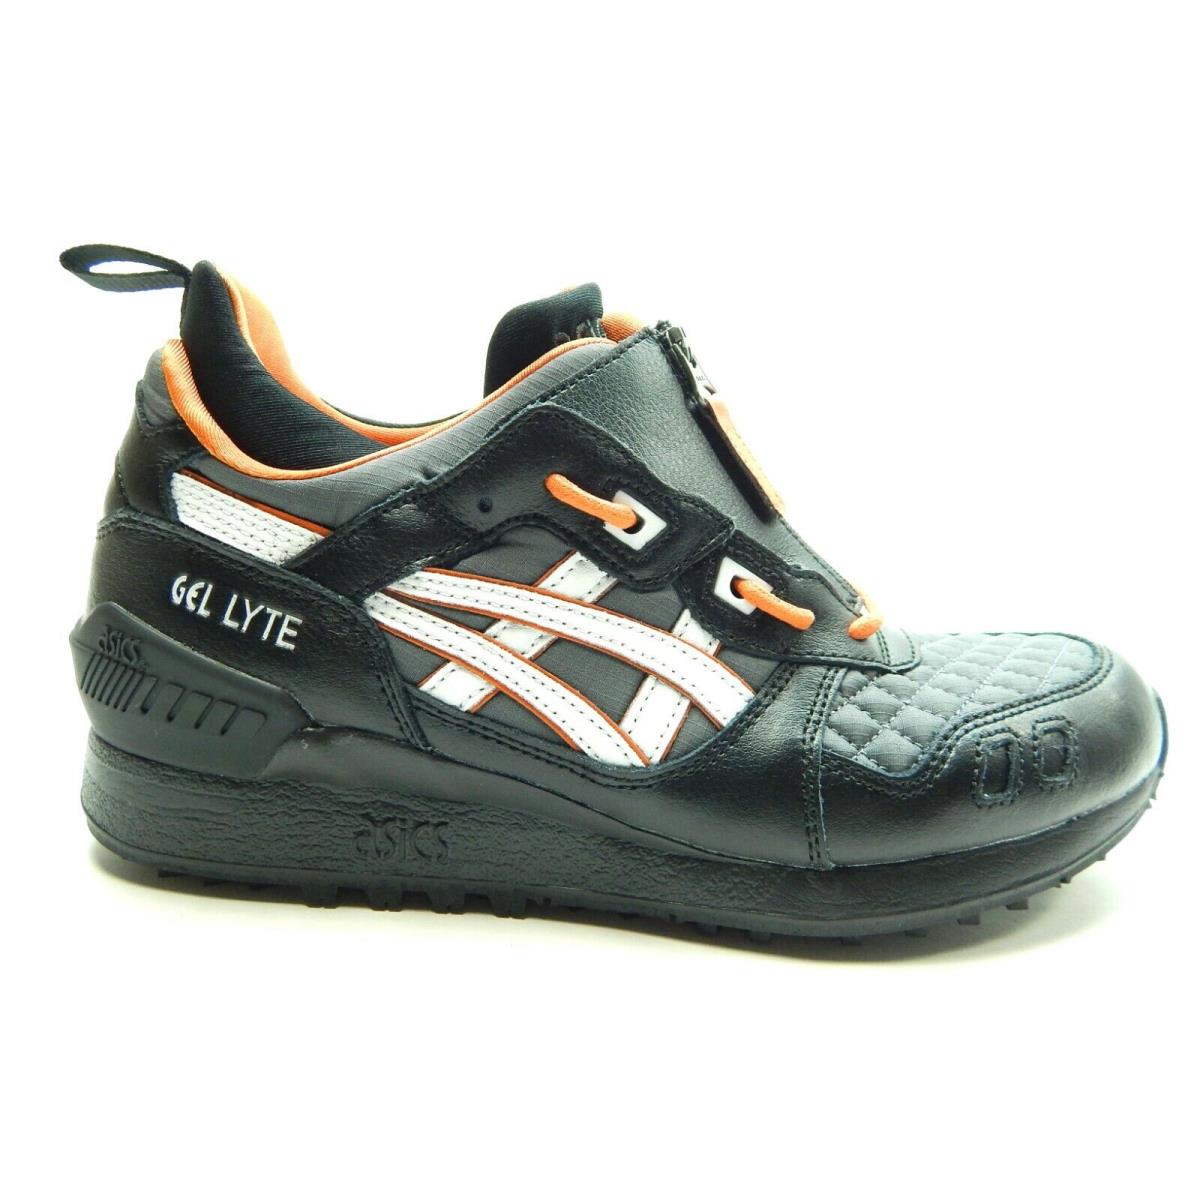 Asics Gel Lyte MT Black White Men Shoes Size 7